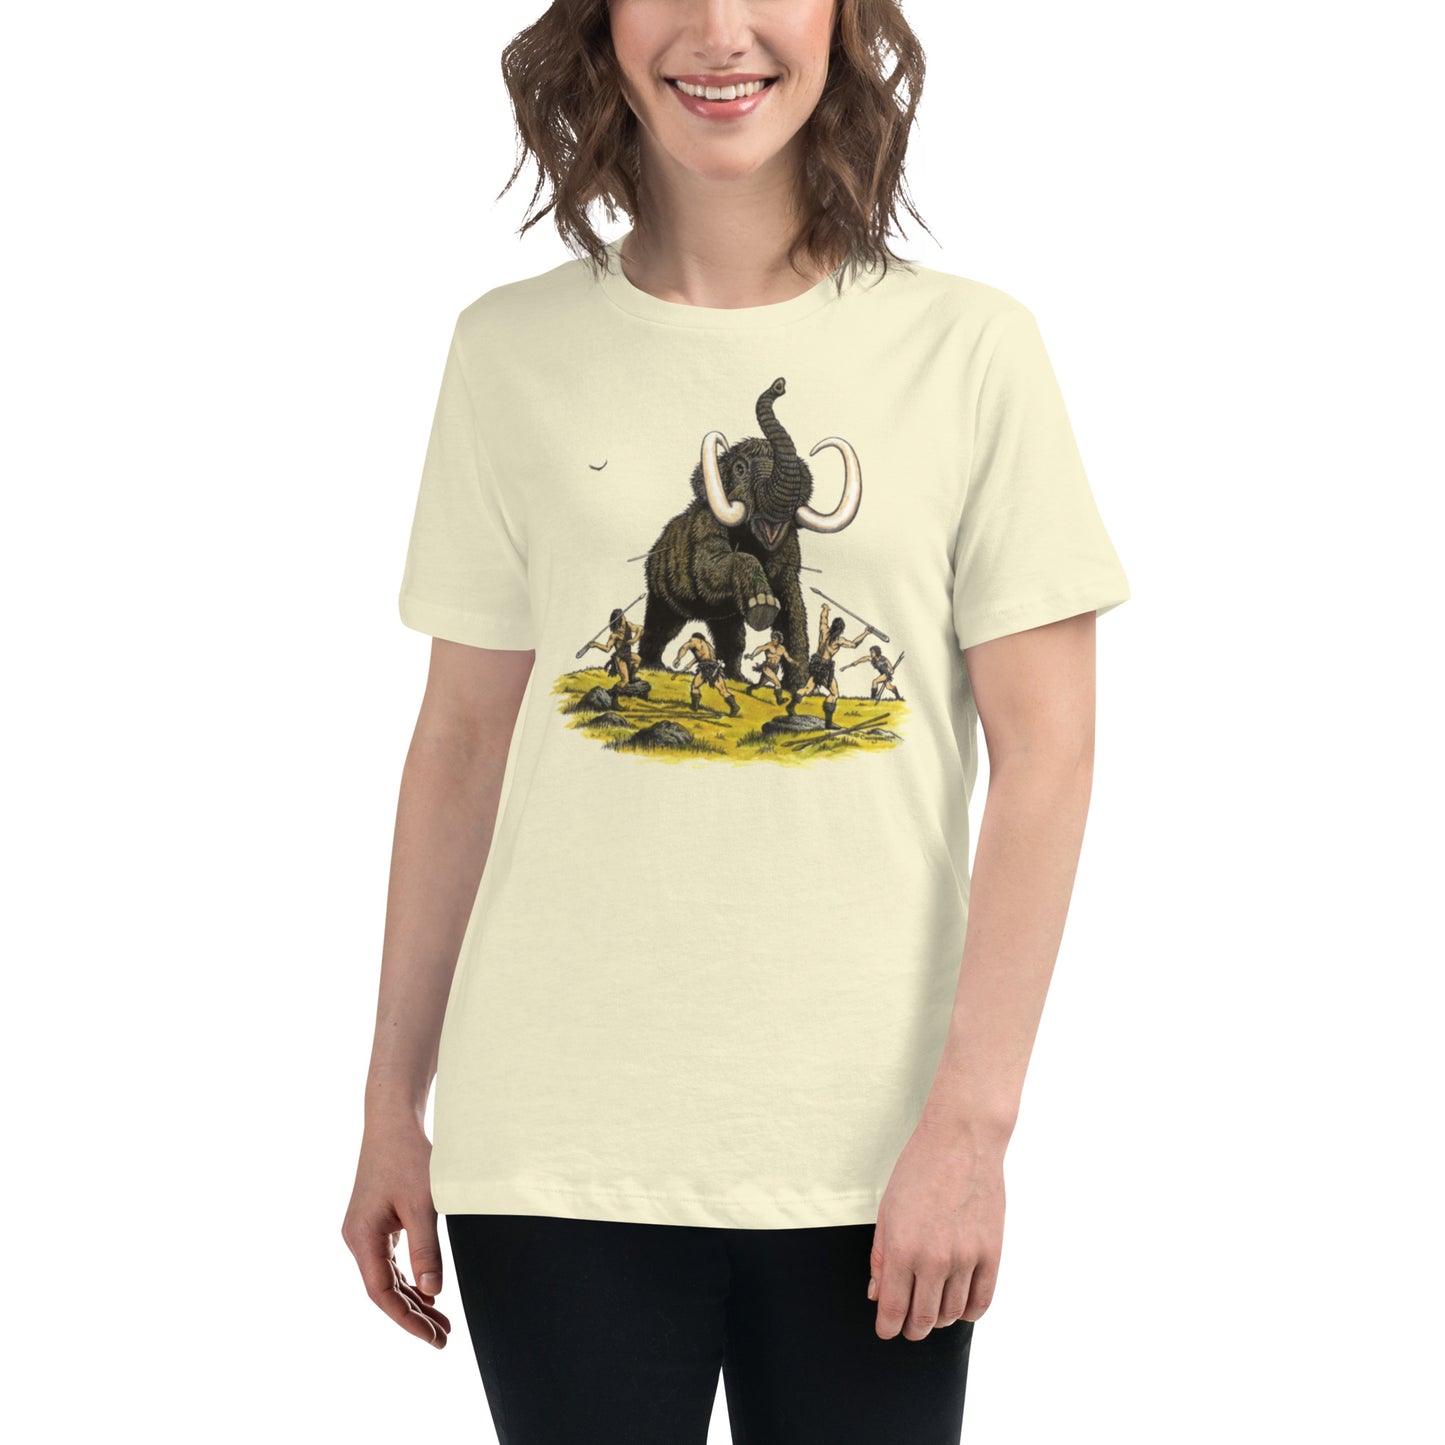 The Mammoth - Women's Relaxed T-Shirt